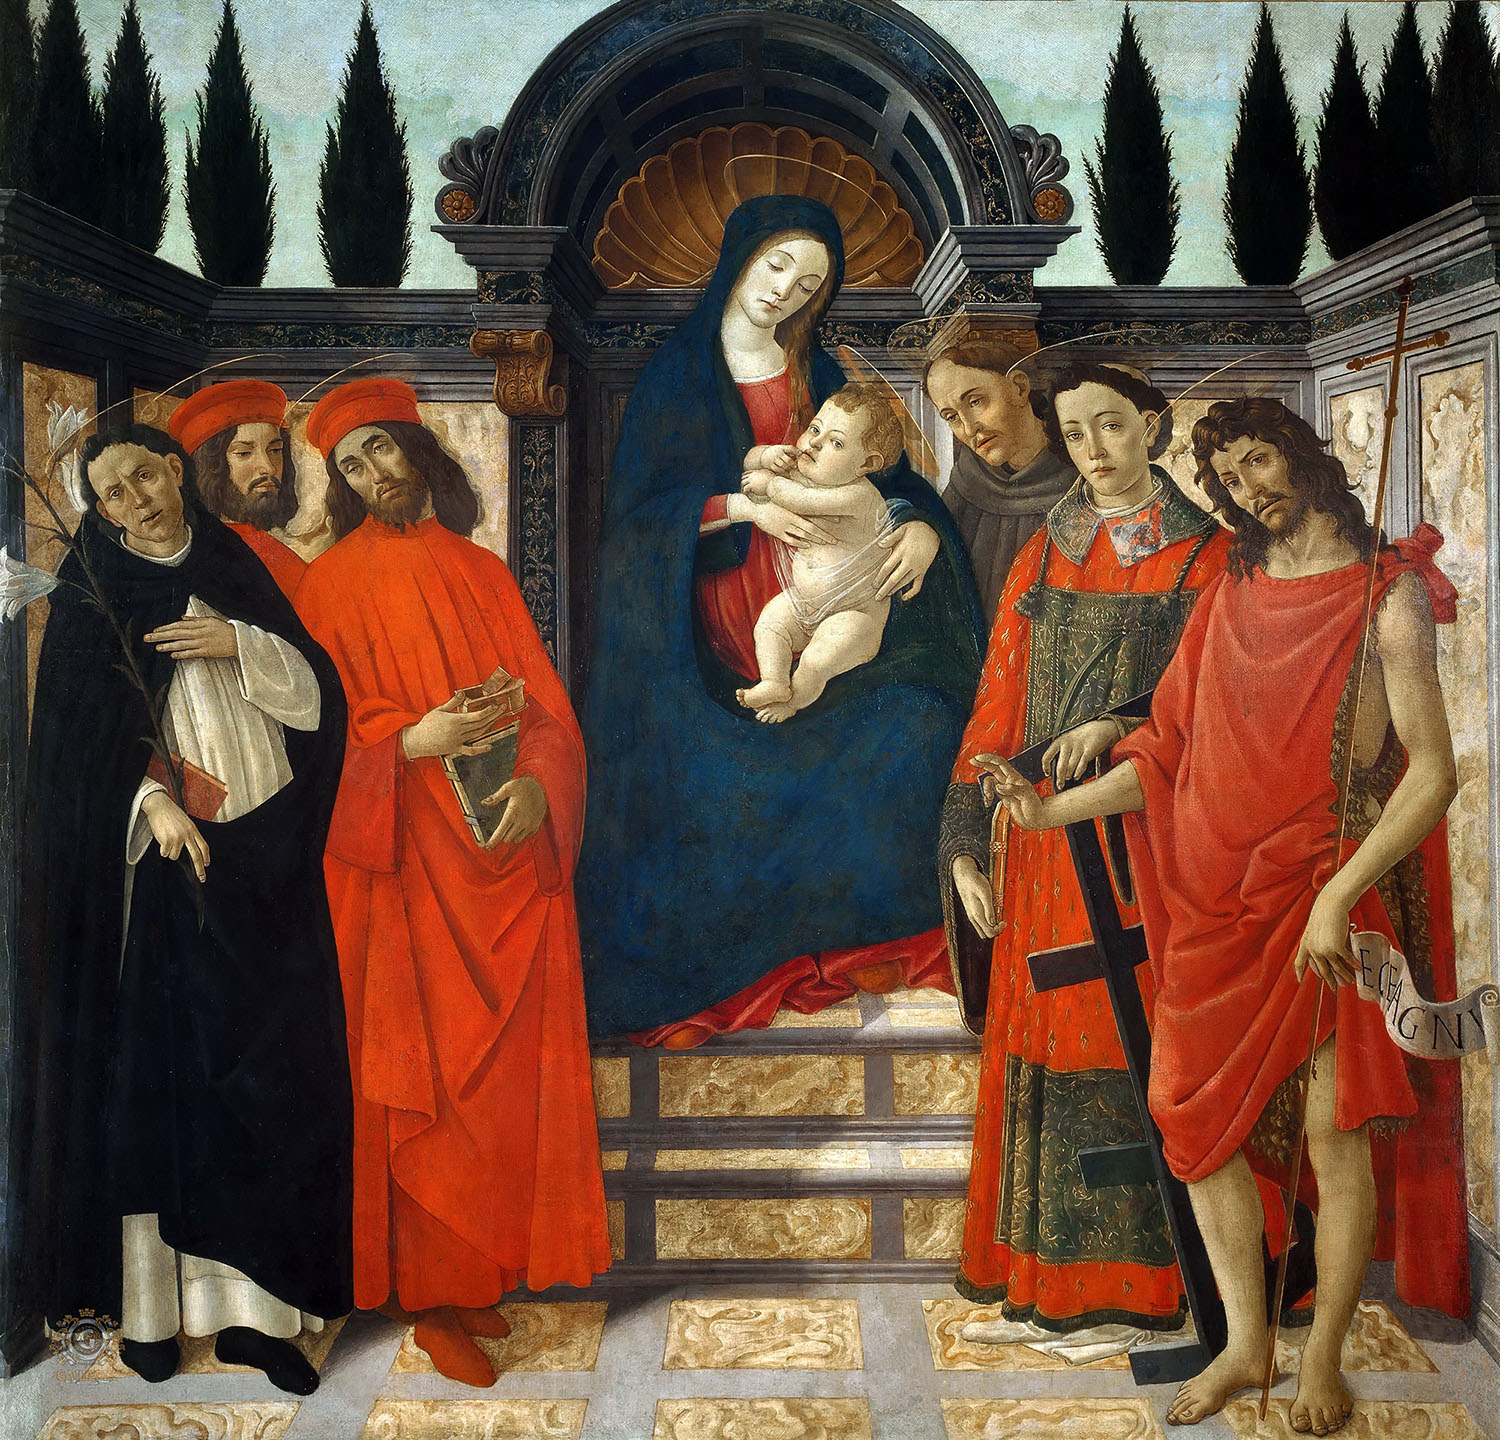 Сандро Боттичелли. "Мадонна с Младенцем со святыми". 1495-1496. Галерея академии искусств, Флоренция.